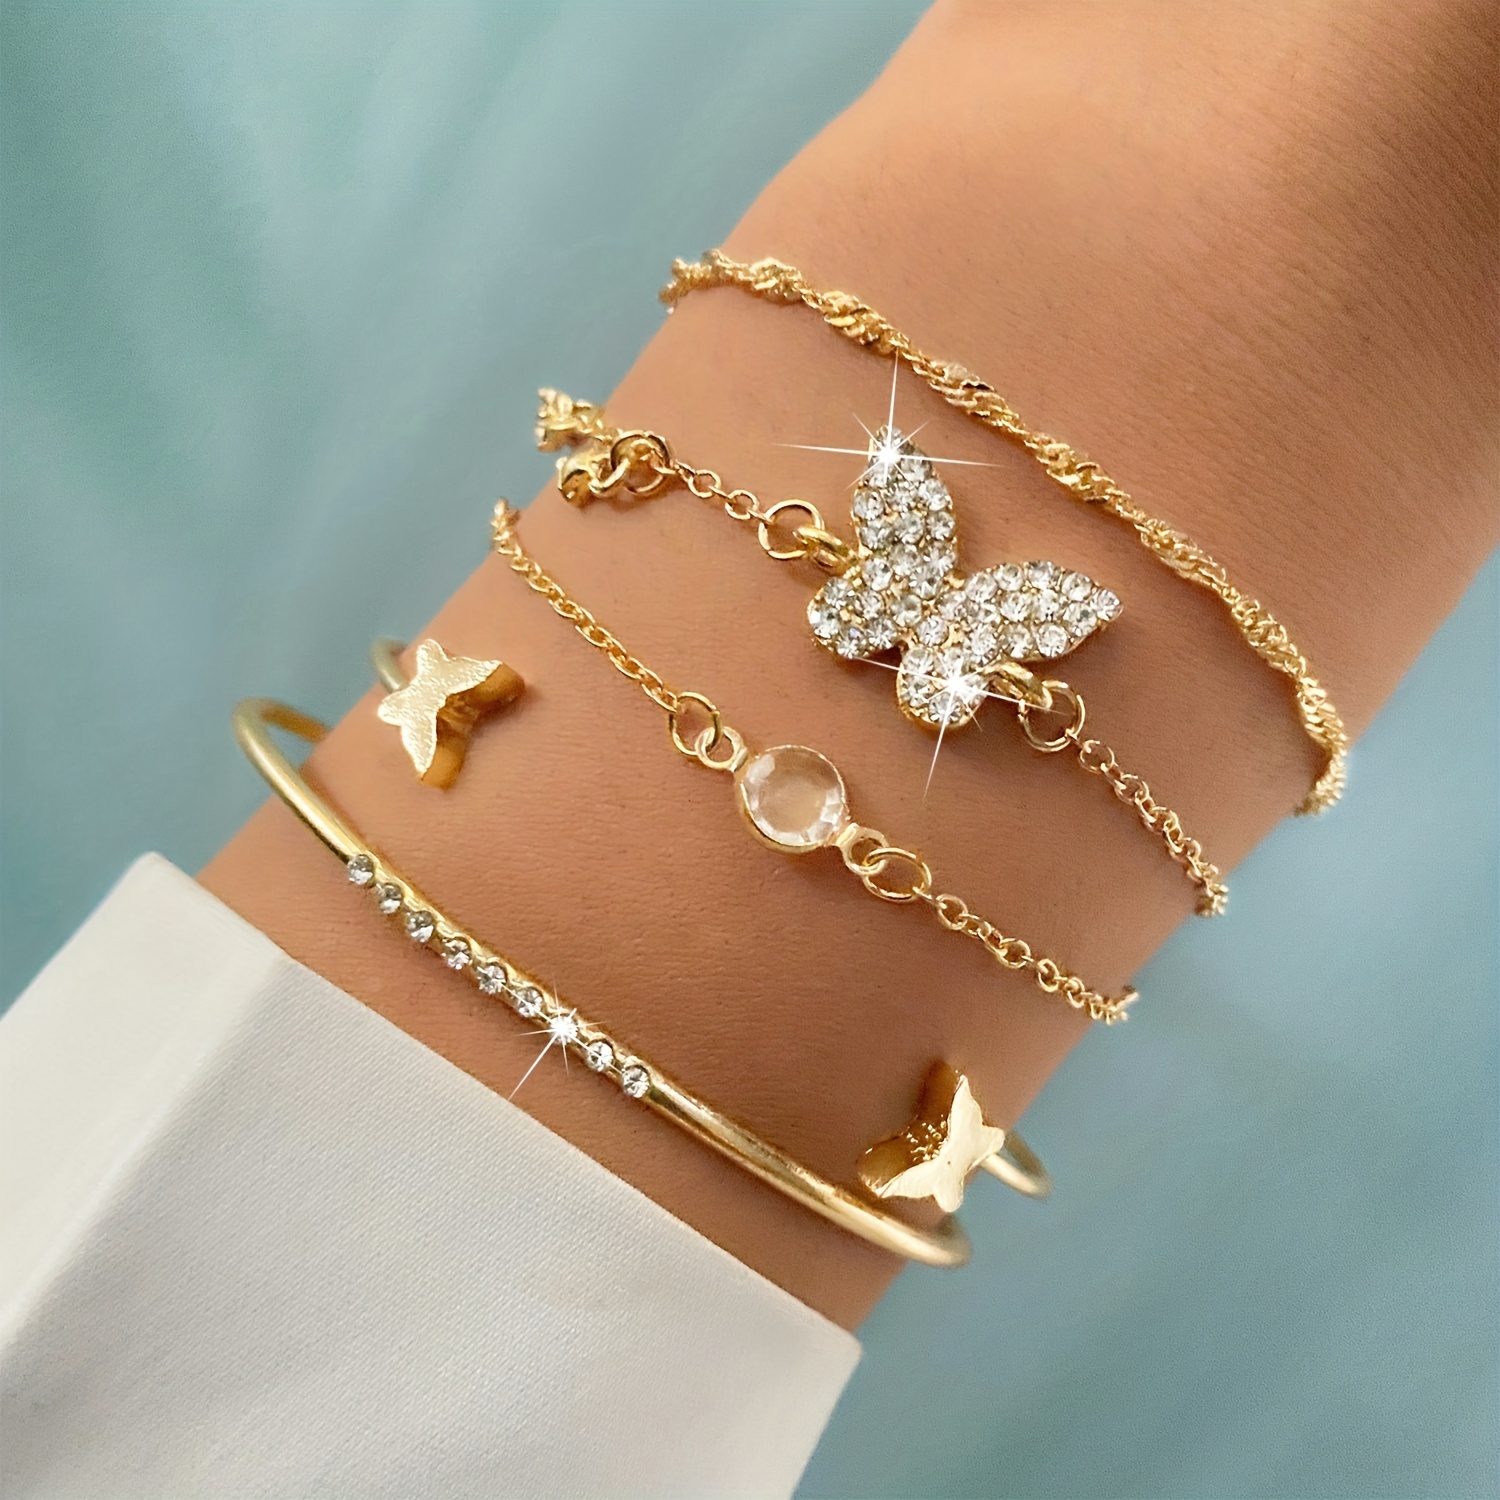 

5pcs/set Butterfly Rhinestone Bracelet Cuff Bangle Animal Design Jewelry For Women